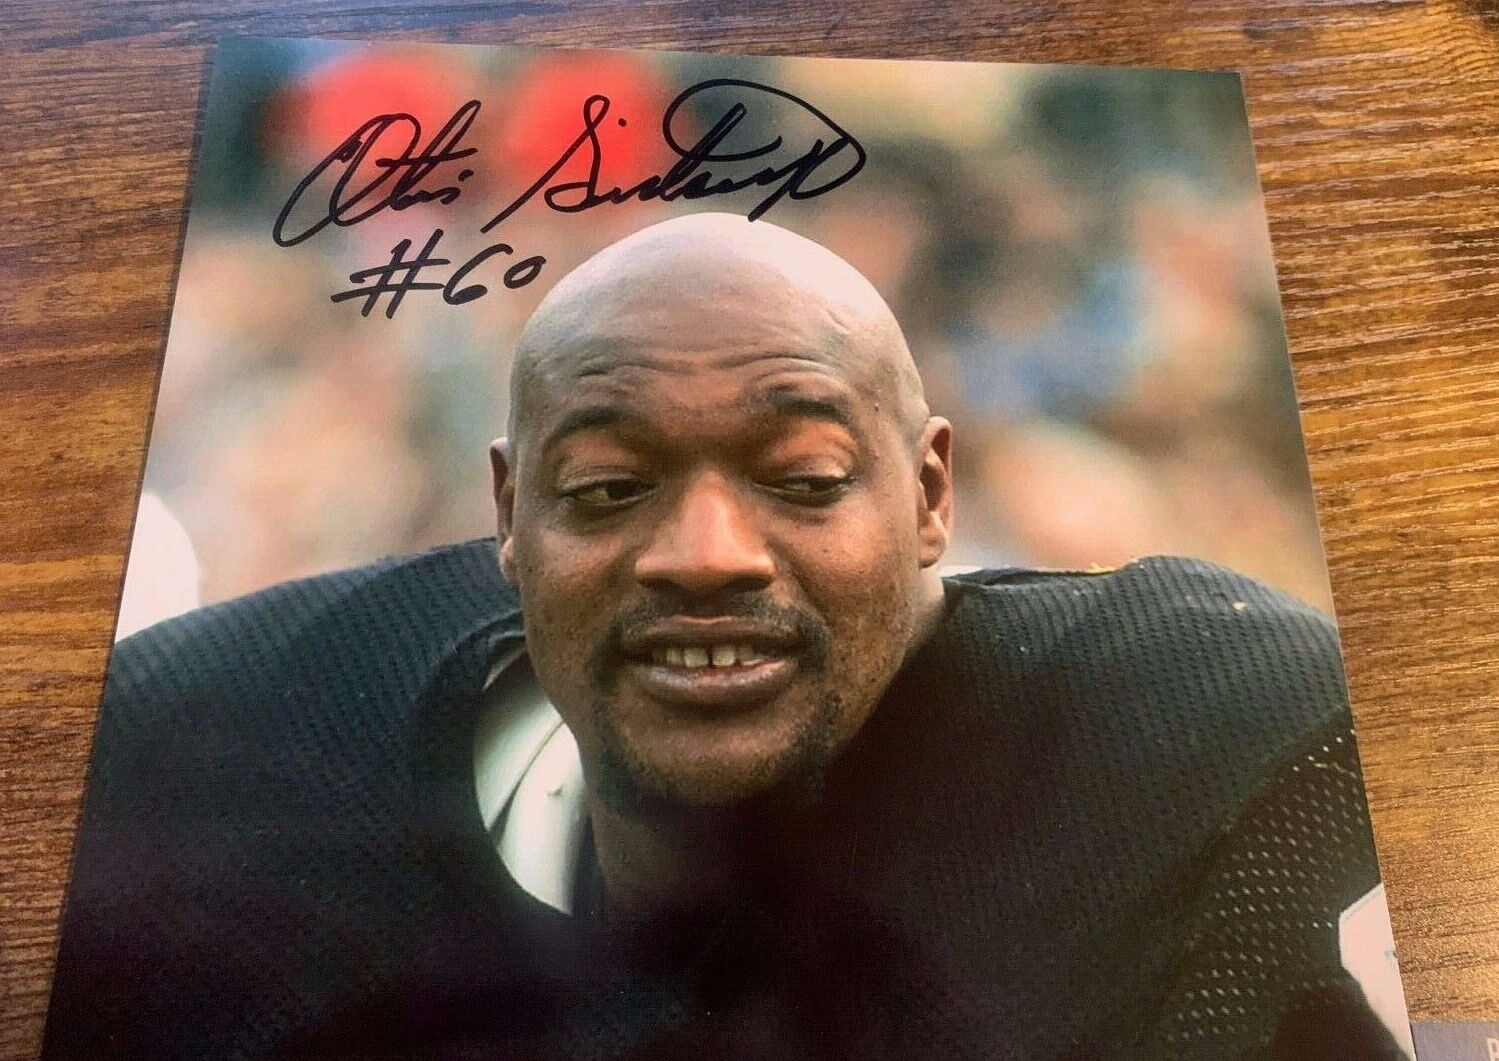 Otis Sistrunk Oakland Raiders Autographed 8x10 NFL Color Photo Beckett F02015